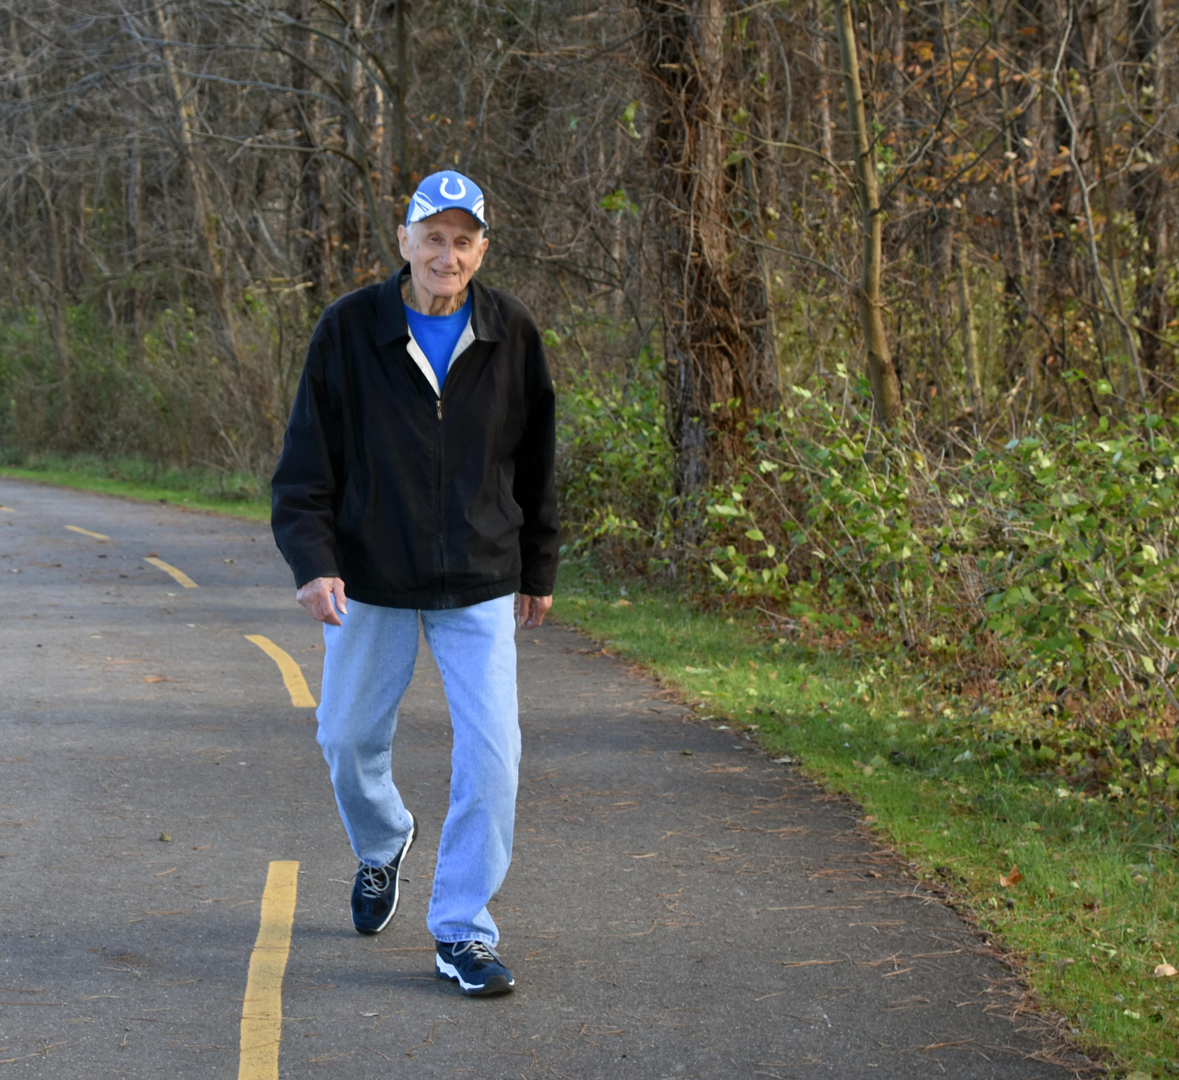 Sam Nonnamacher walks the trail at Blacklick Woods Metro Park